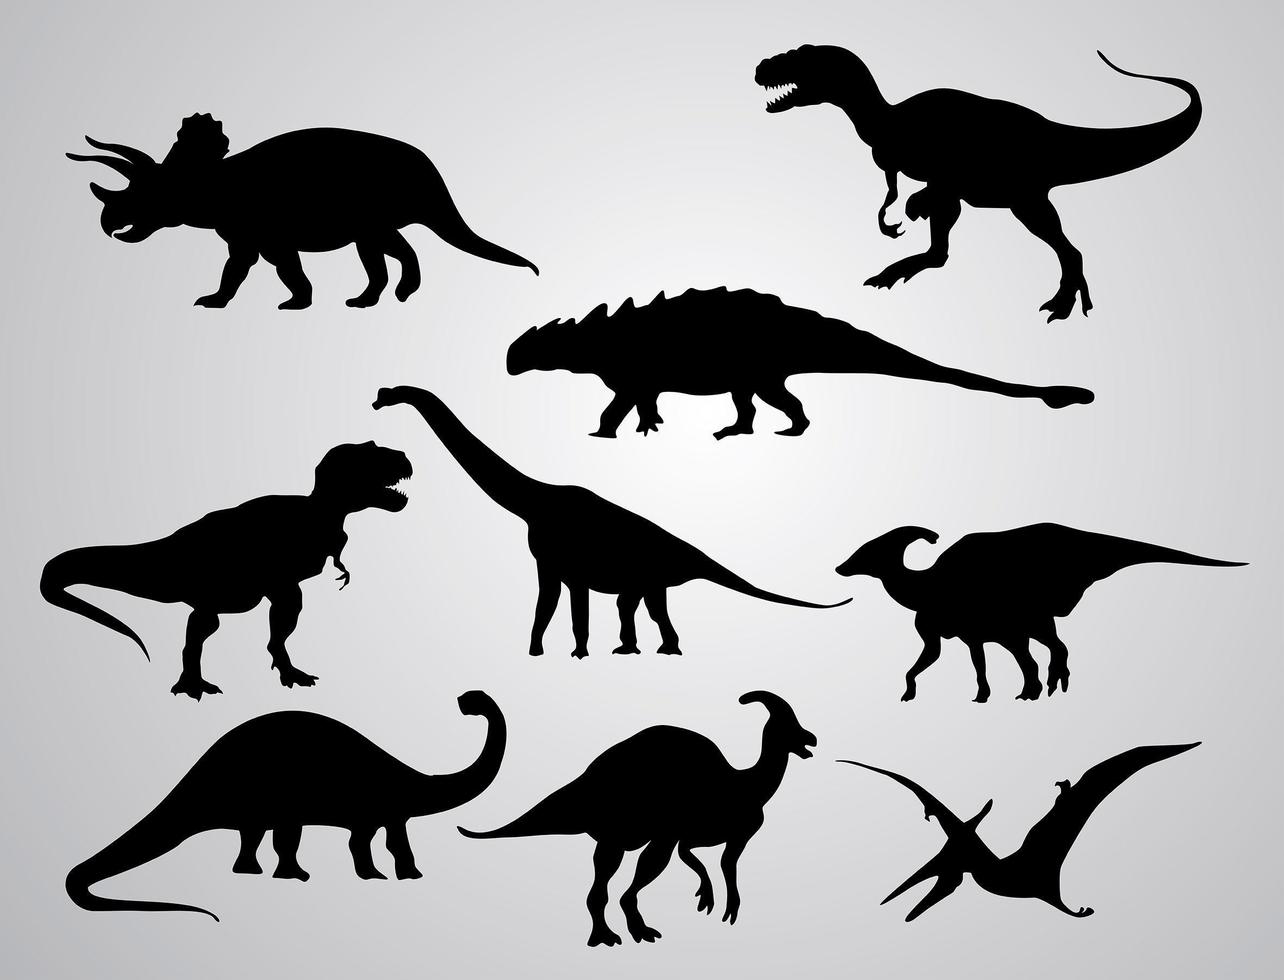 jeu de silhouette de dinosaure vecteur